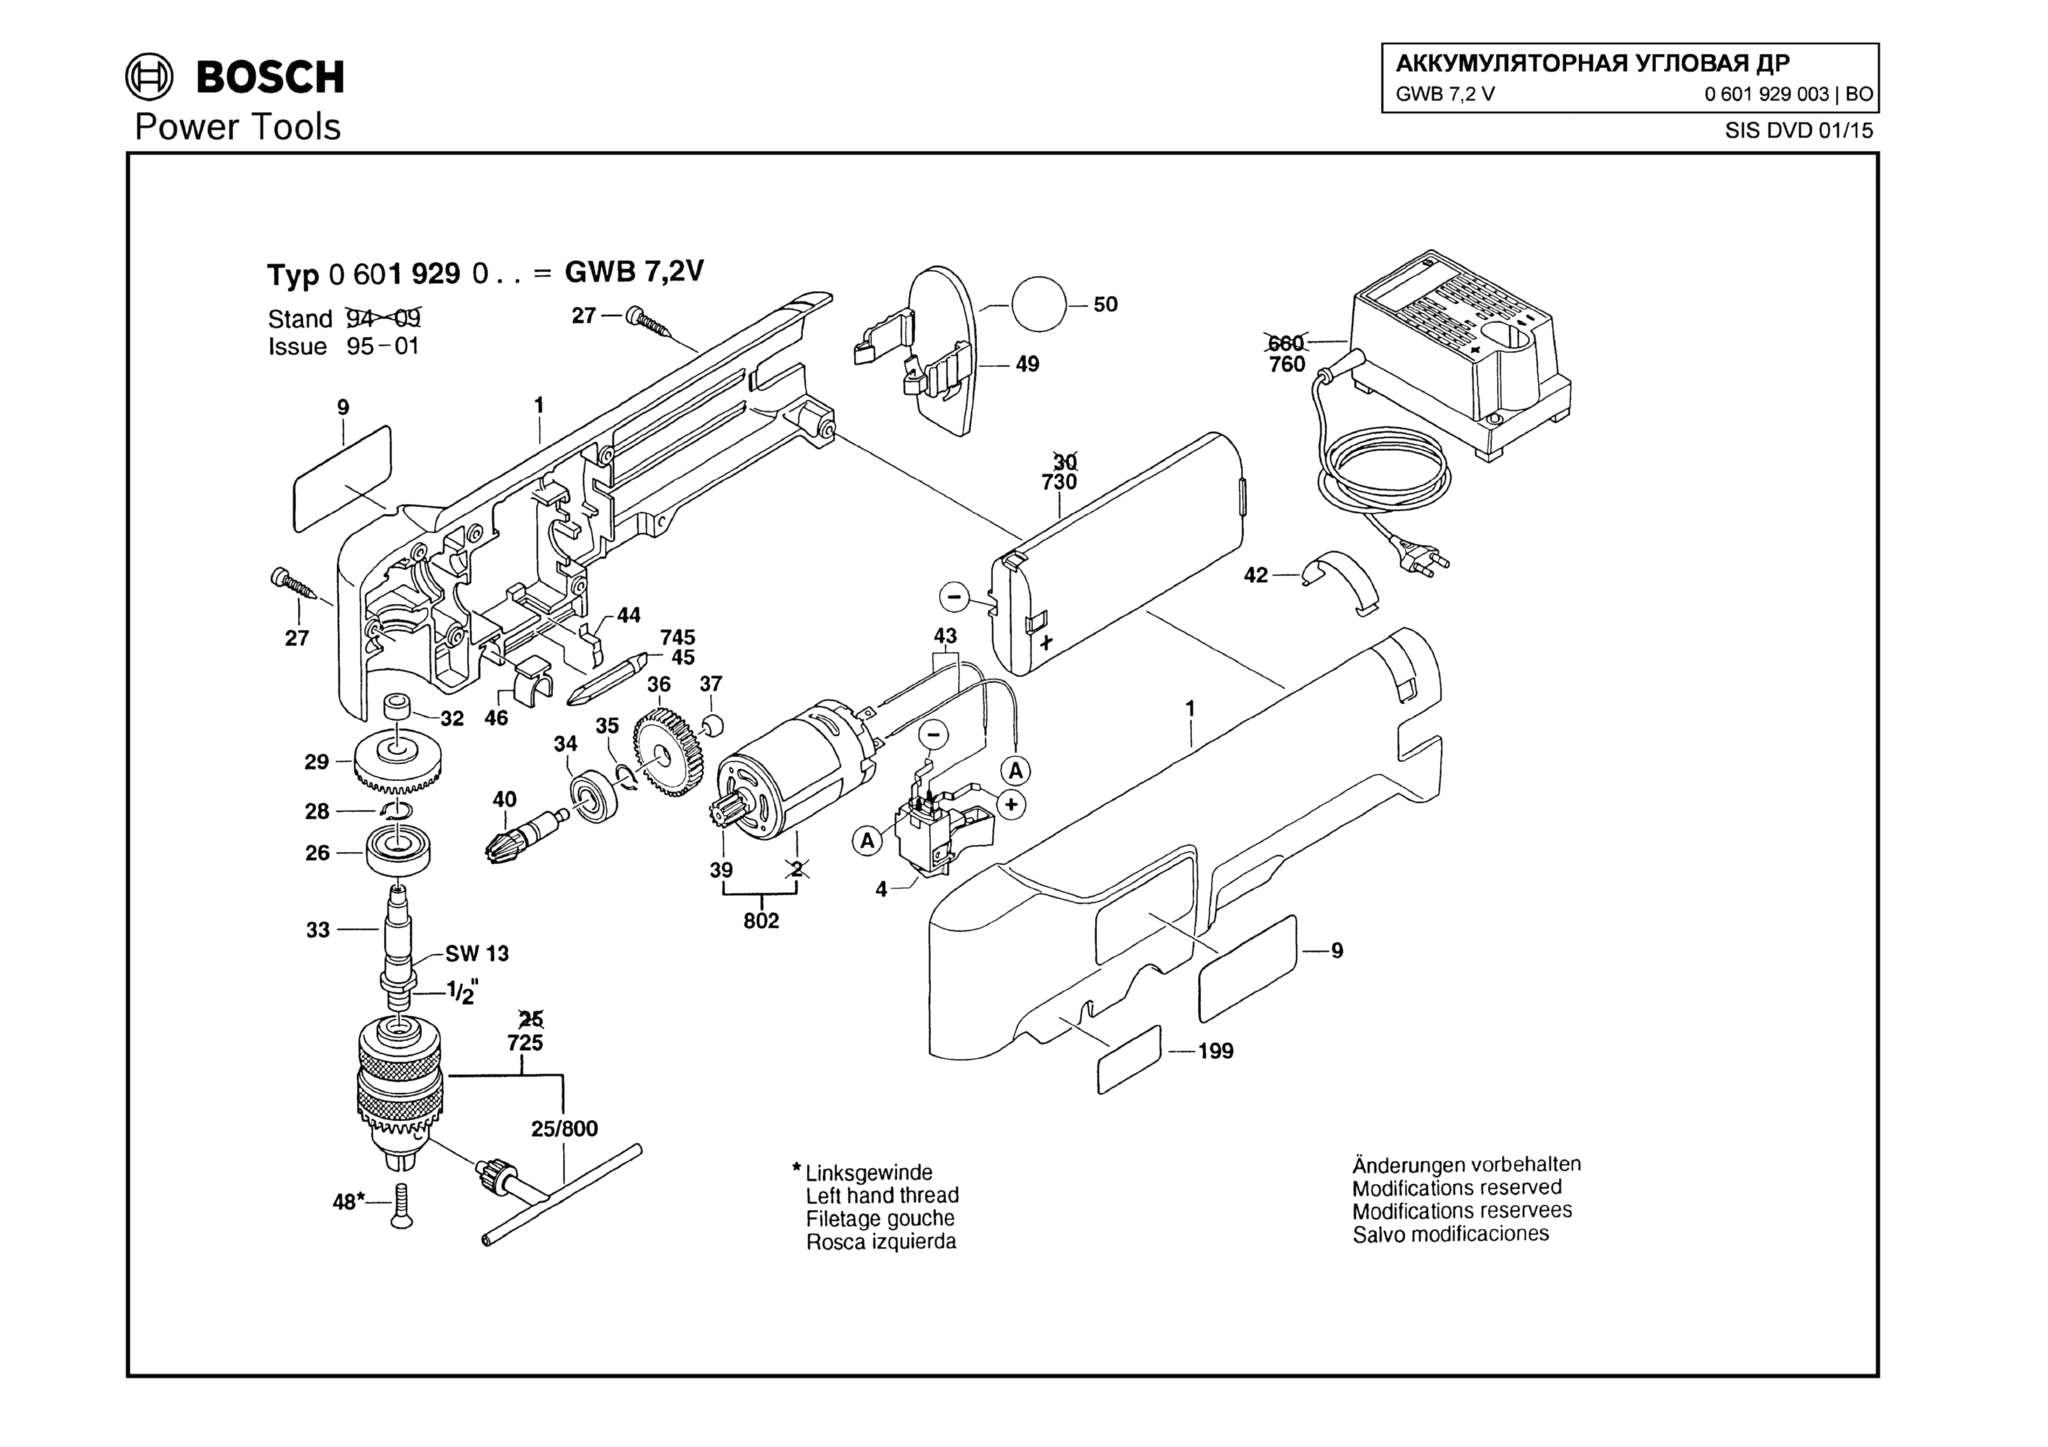 Запчасти, схема и деталировка Bosch GWB 7,2 V (ТИП 0601929003)